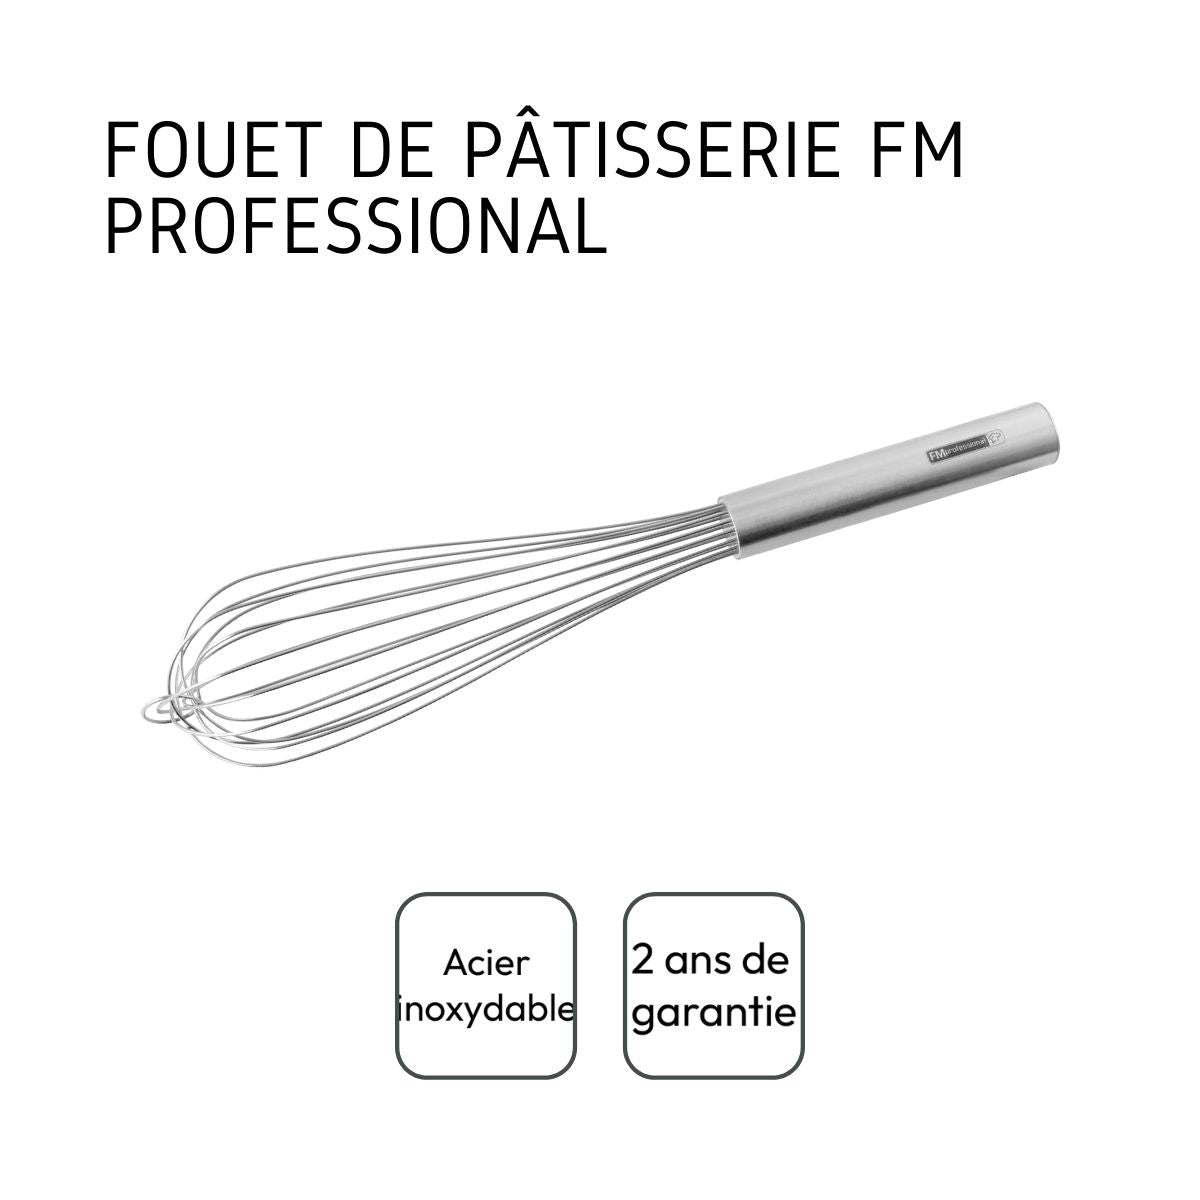 Fouet cuisine 35 cm FM Professional